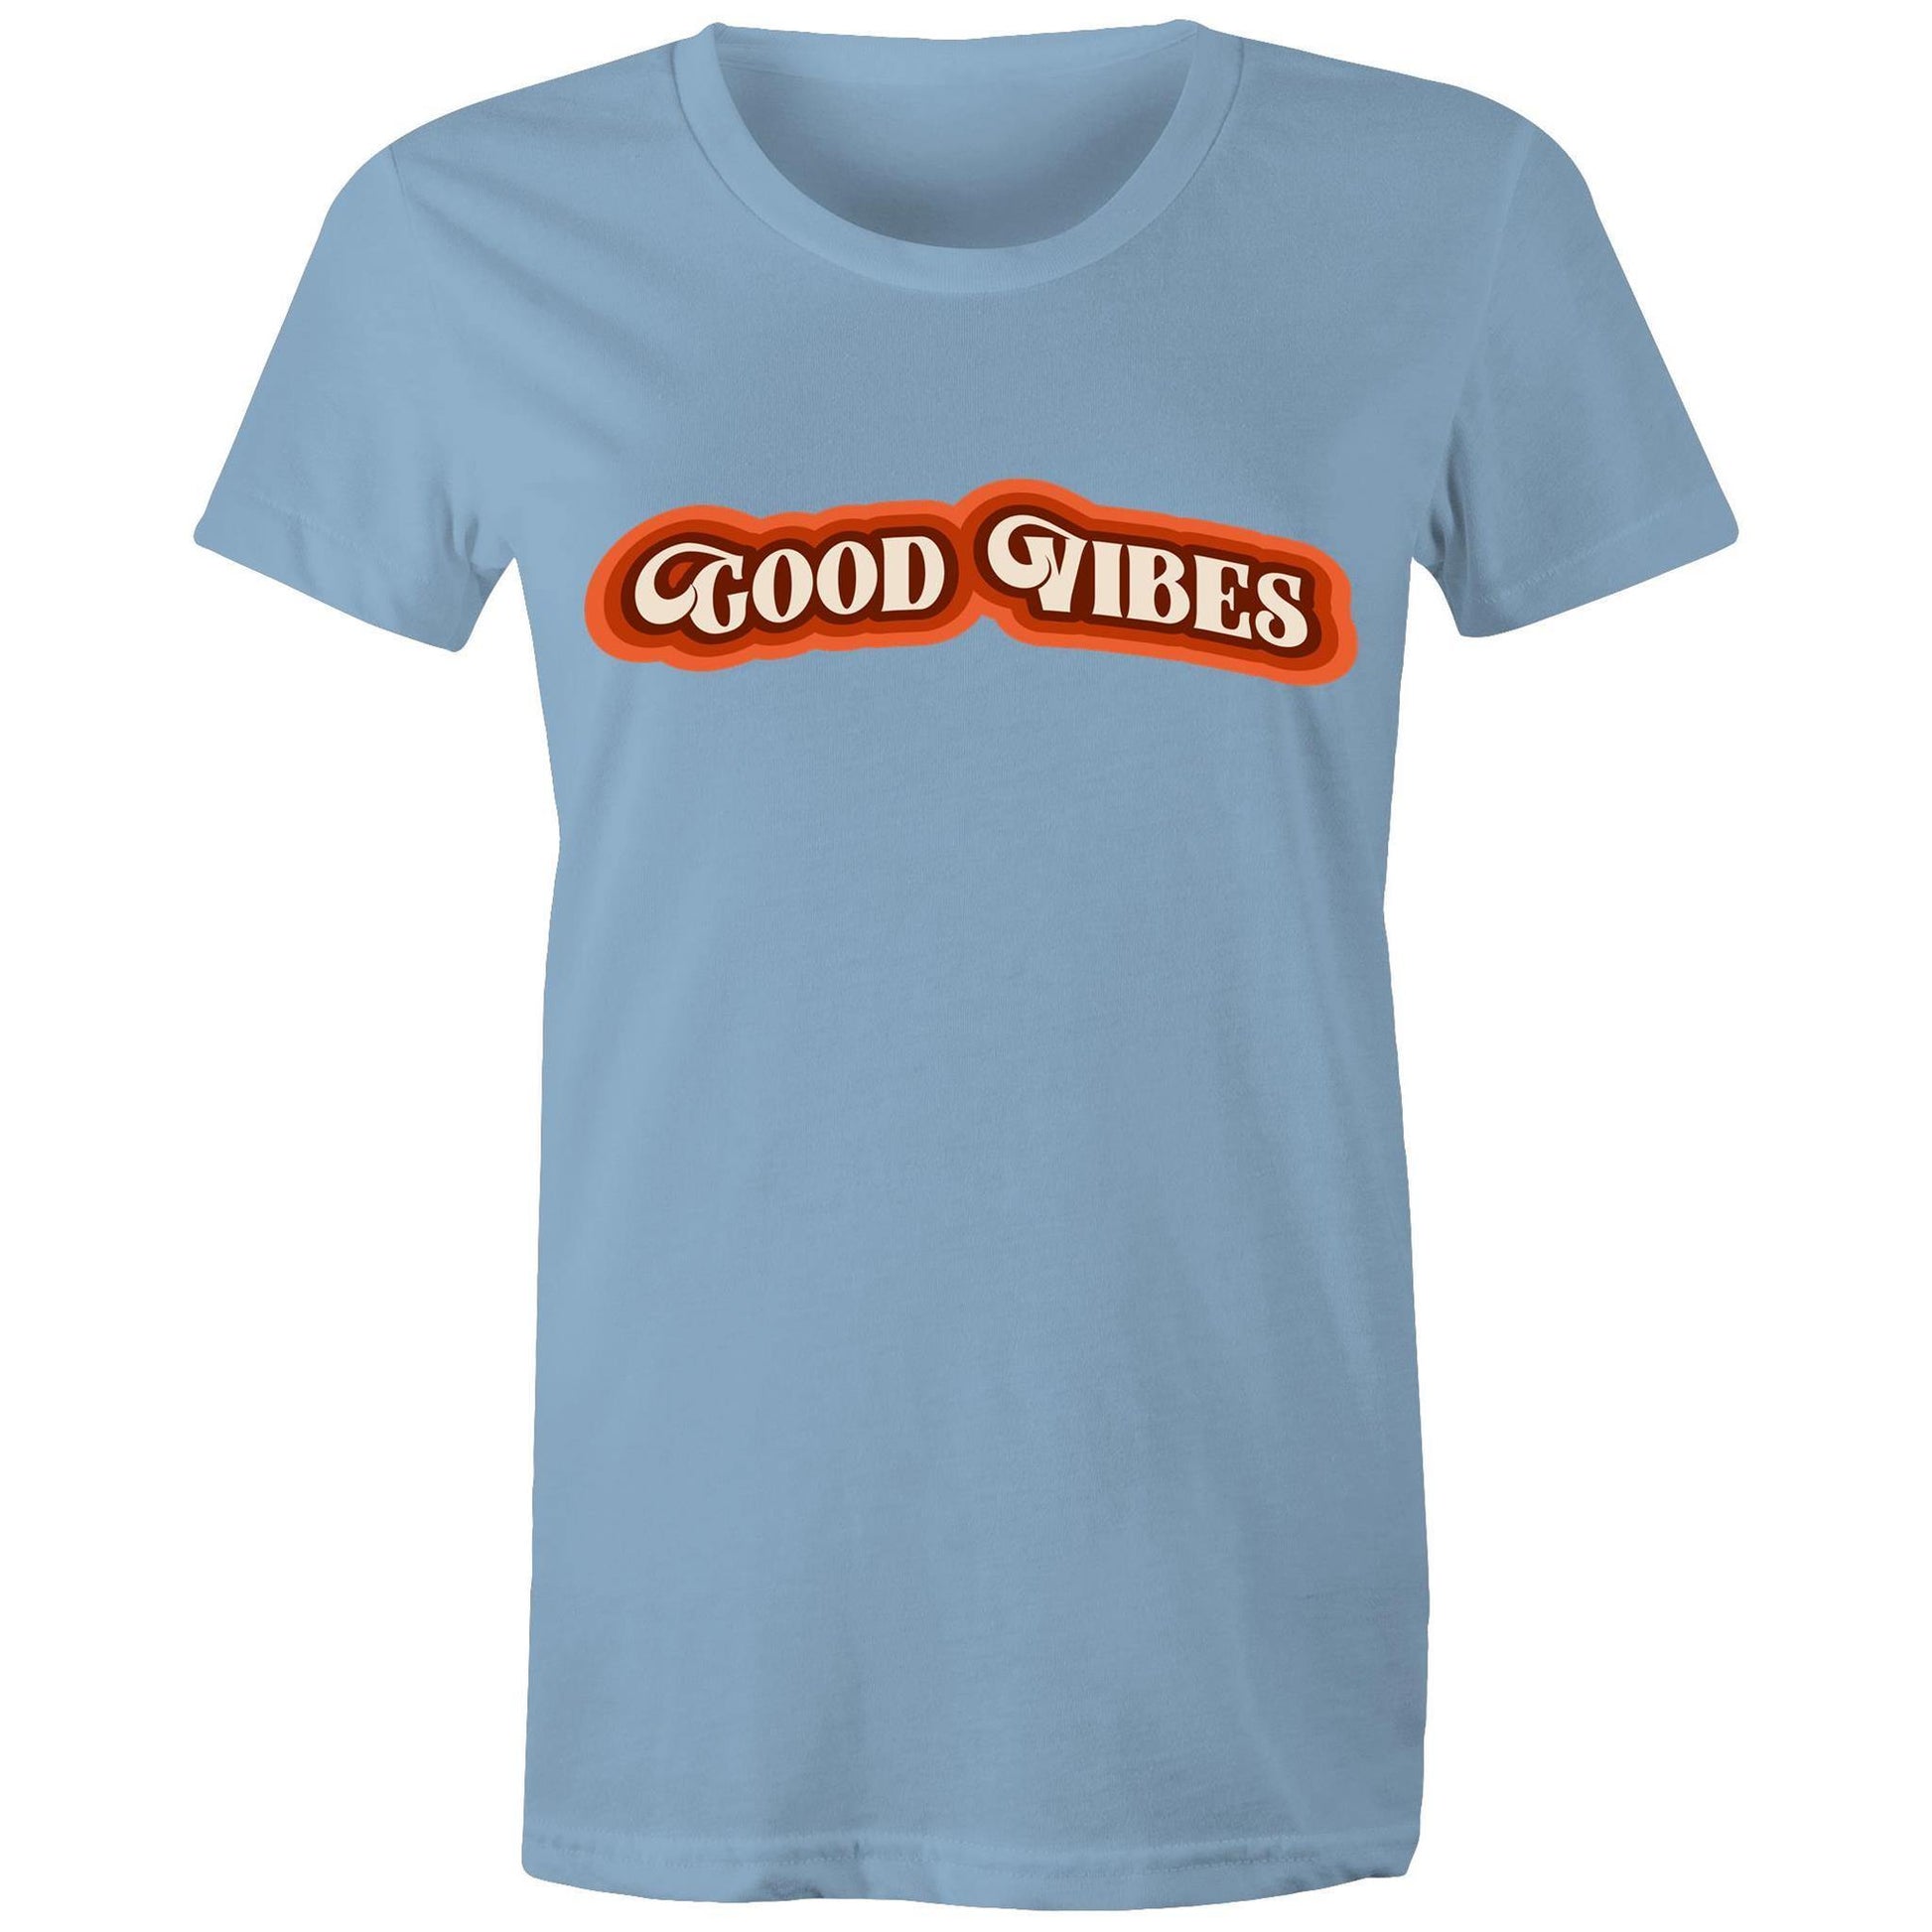 Good Vibes - Women's T-shirt Carolina Blue Womens T-shirt Retro Womens